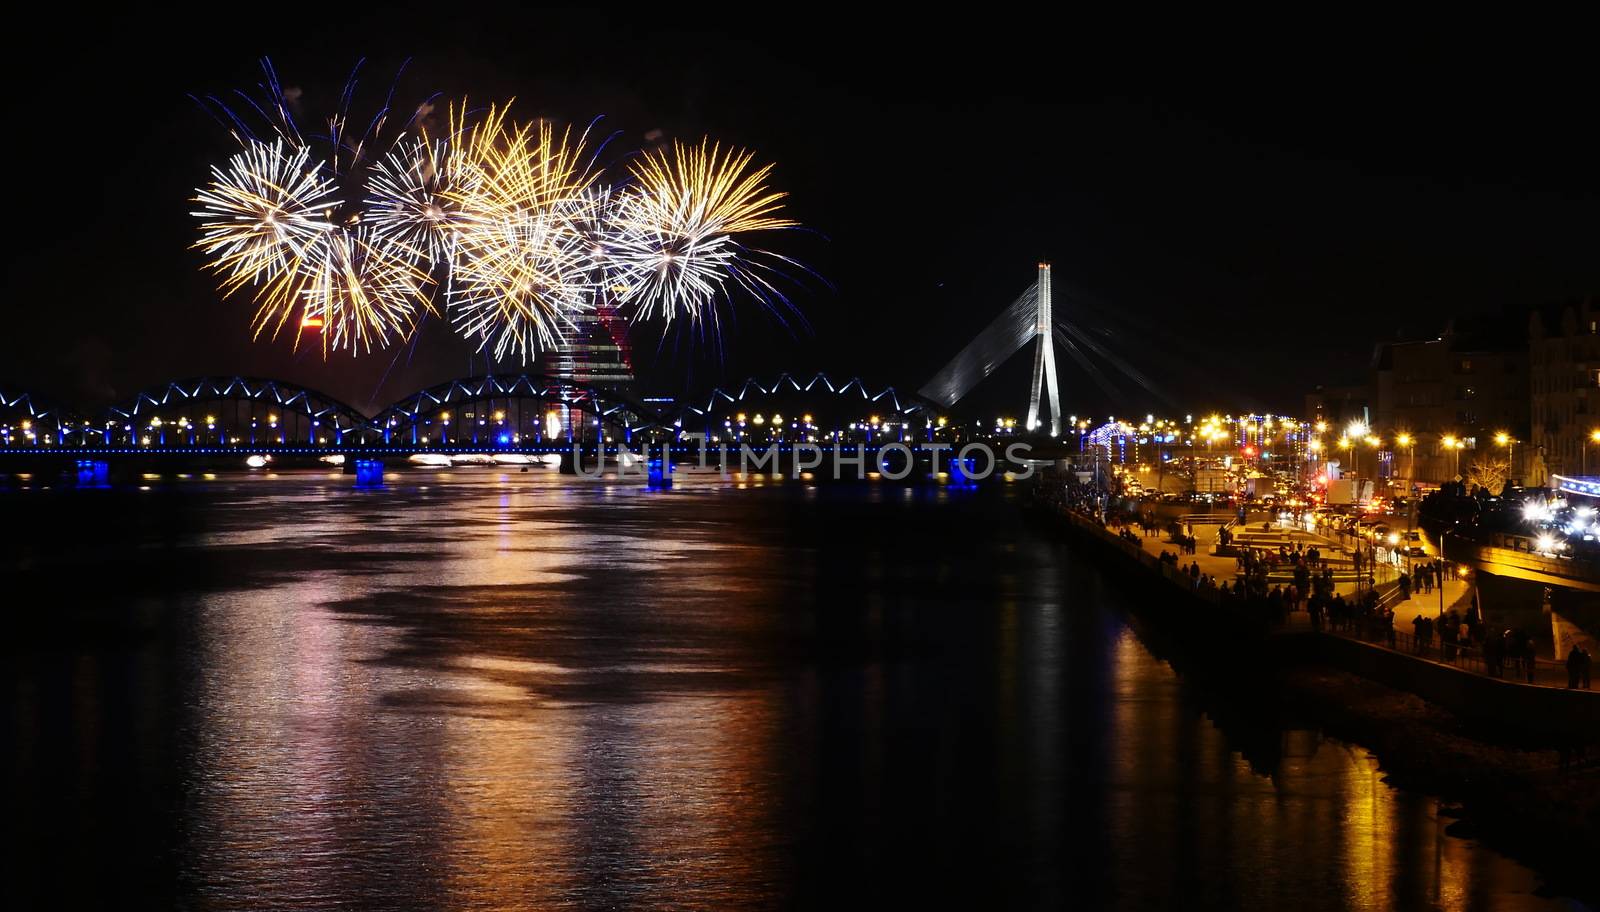 Fireworks in Big Eeuropean city Riga by dolfinvik